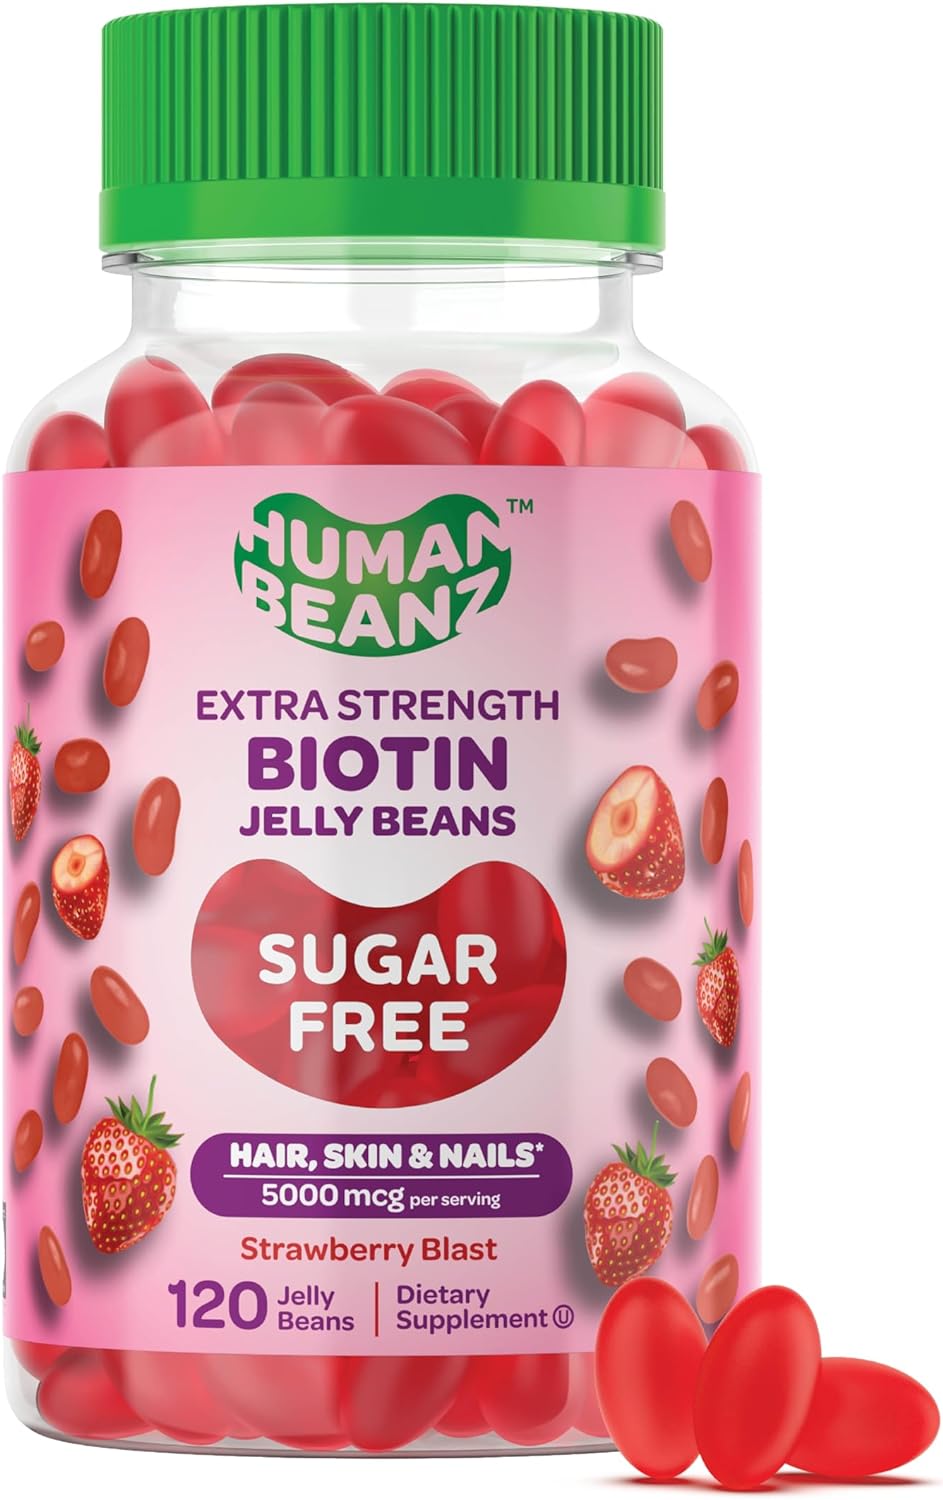 Sugar Free Biotin Jelly Bean Gummy Vitamins, 5000mcg Extra Strength Biotin for Hair, Skin, and Nails, 120 Strawberry Blast Jellybeans Vitamins for Men and Women, Kosher